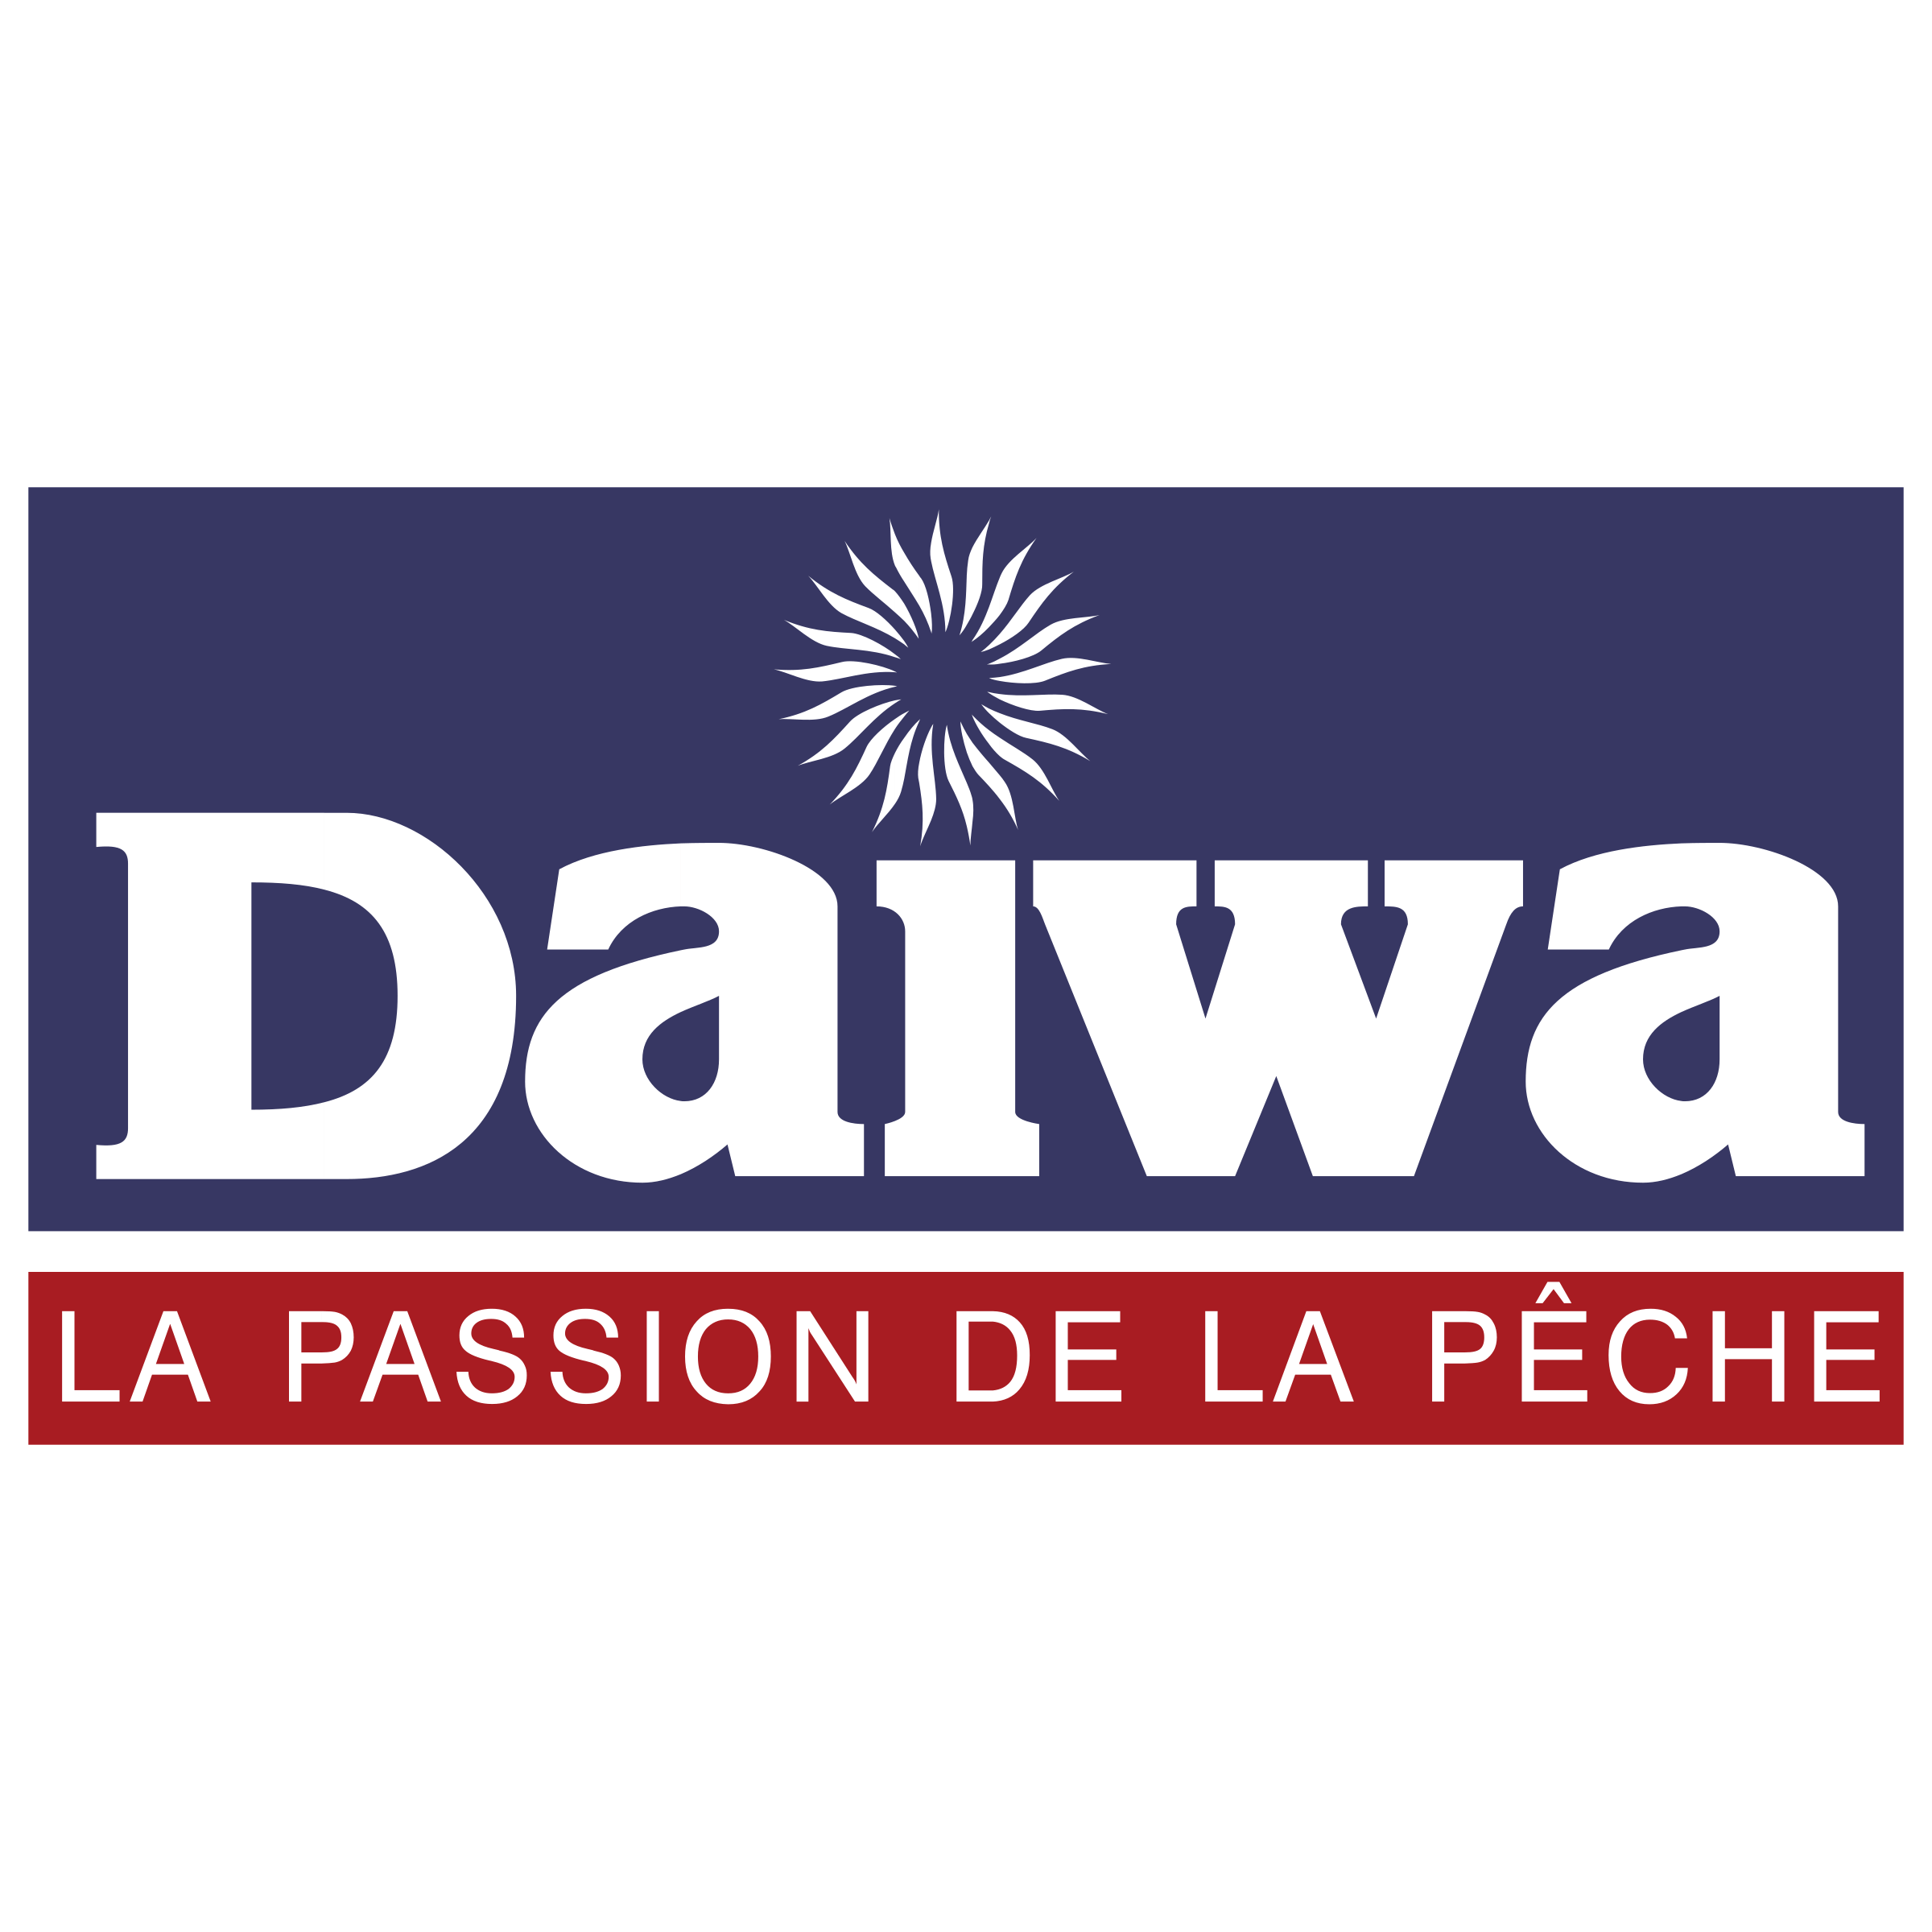 Daiwa Logo - Daiwa Logo PNG Transparent & SVG Vector - Freebie Supply